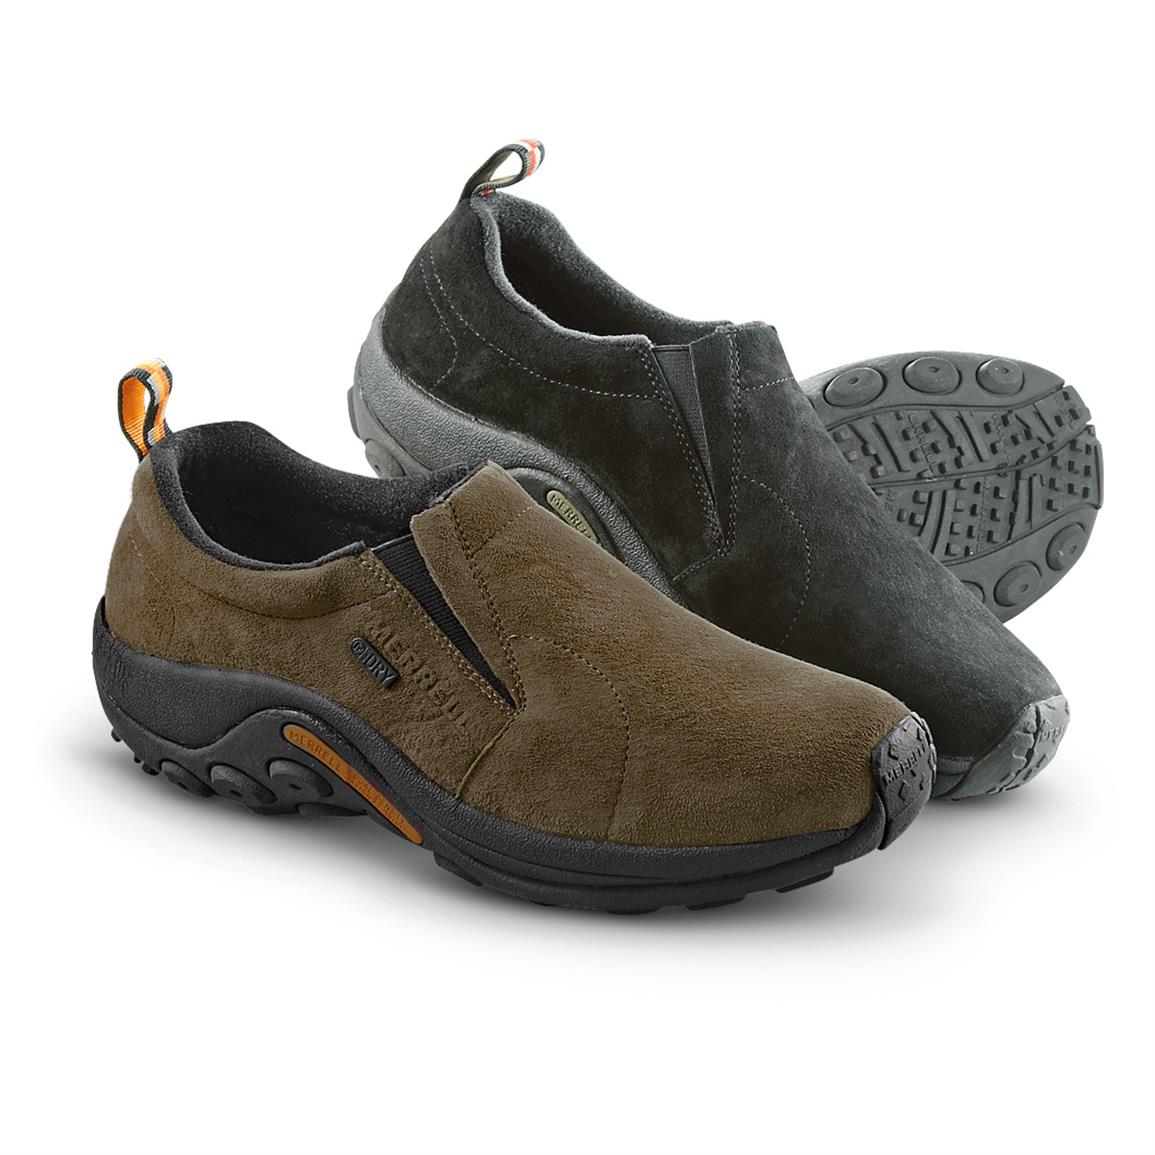 Merrell Men's Jungle Moc Waterproof Slip-On Shoes - 425150, Casual ...